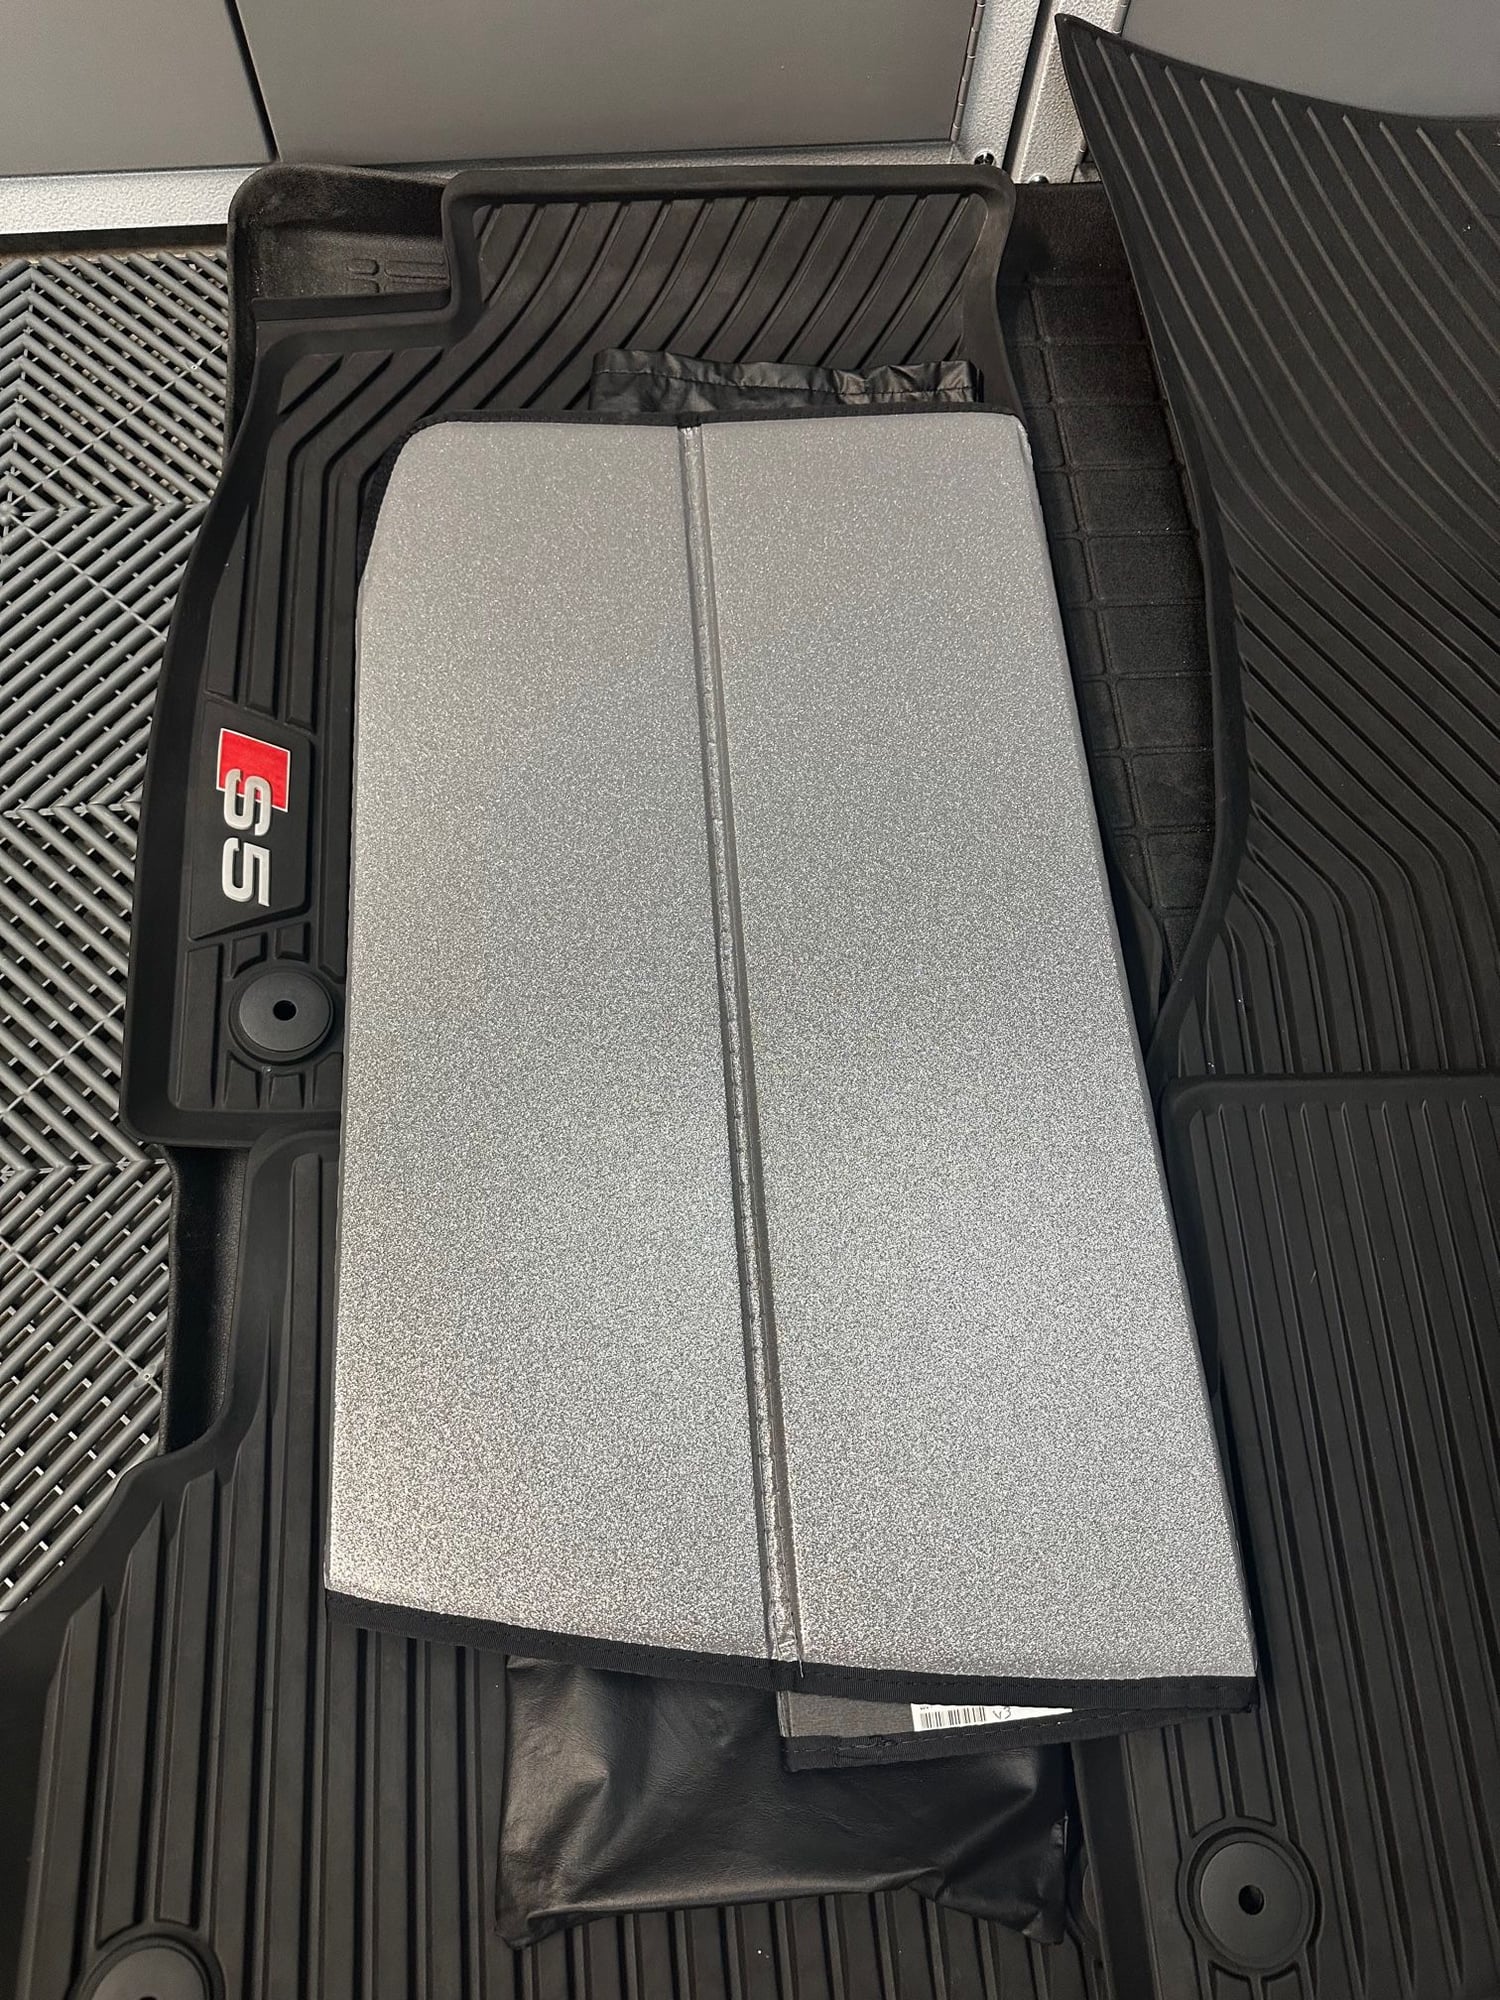 2018 Audi S5 Sportback - Audi B9 S5 Sportback parts - San Jose, CA 95122, United States